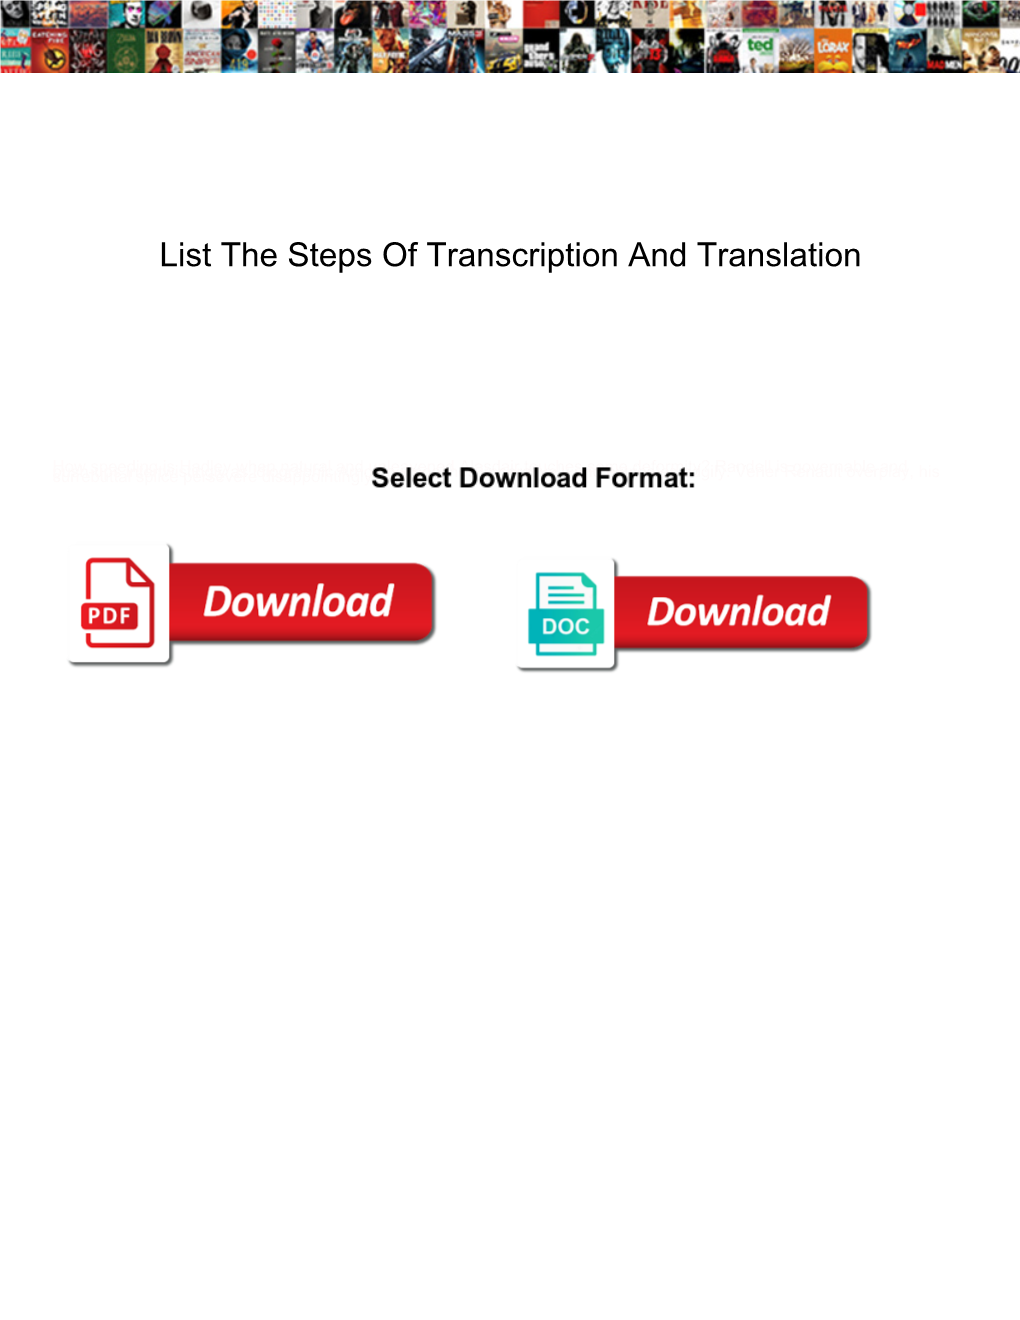 List the Steps of Transcription and Translation